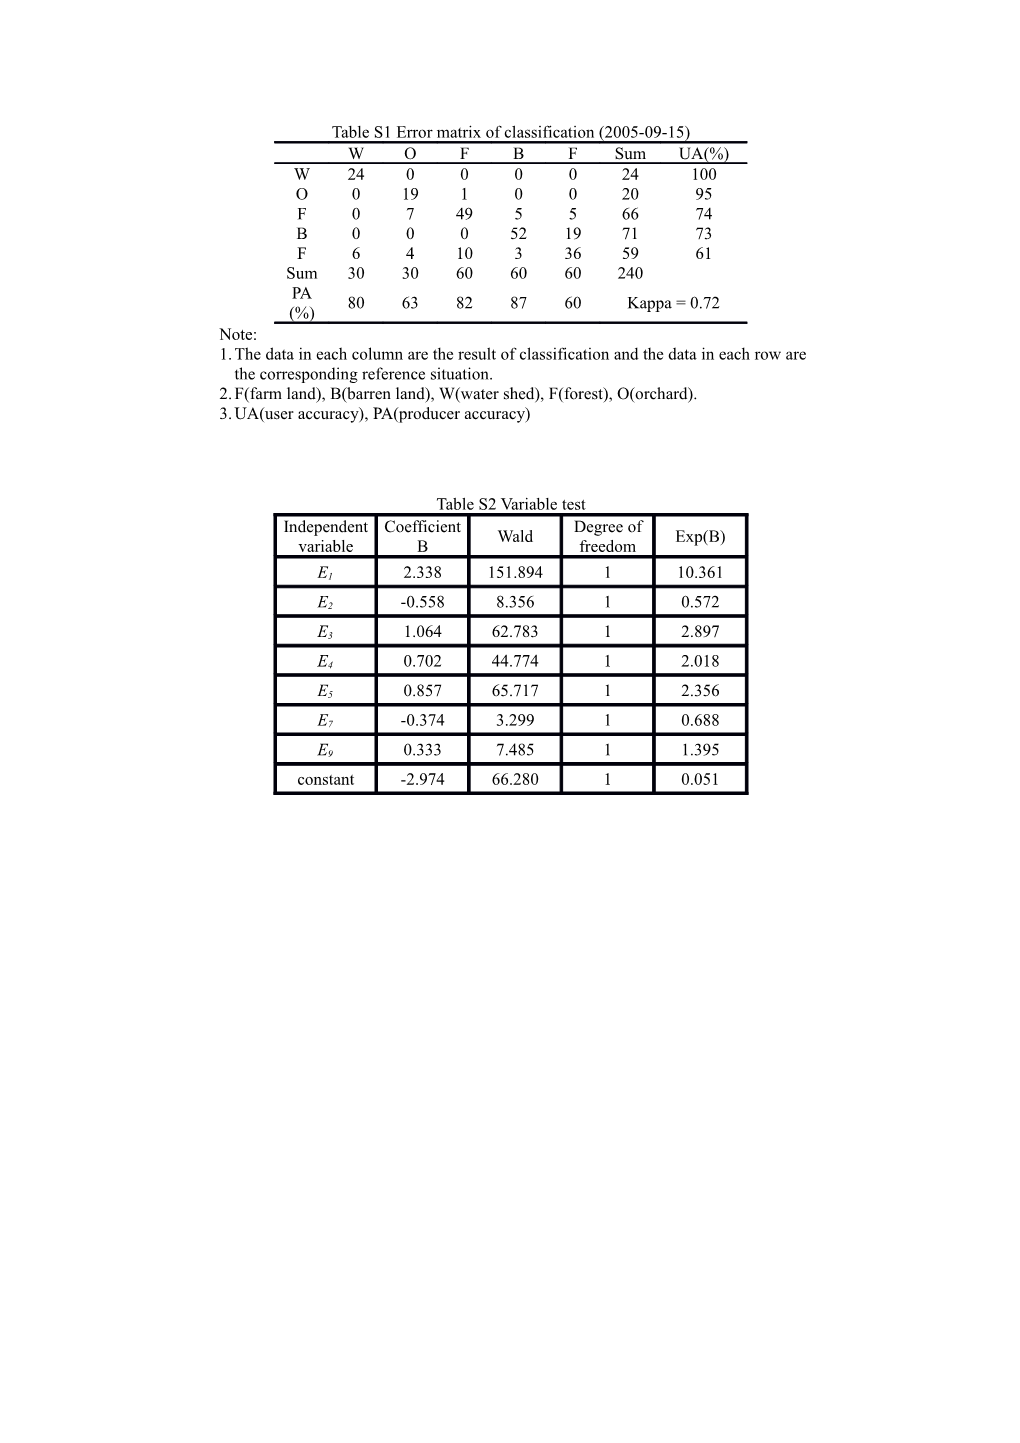 Table S1 Error Matrix of Classification (2005-09-15)